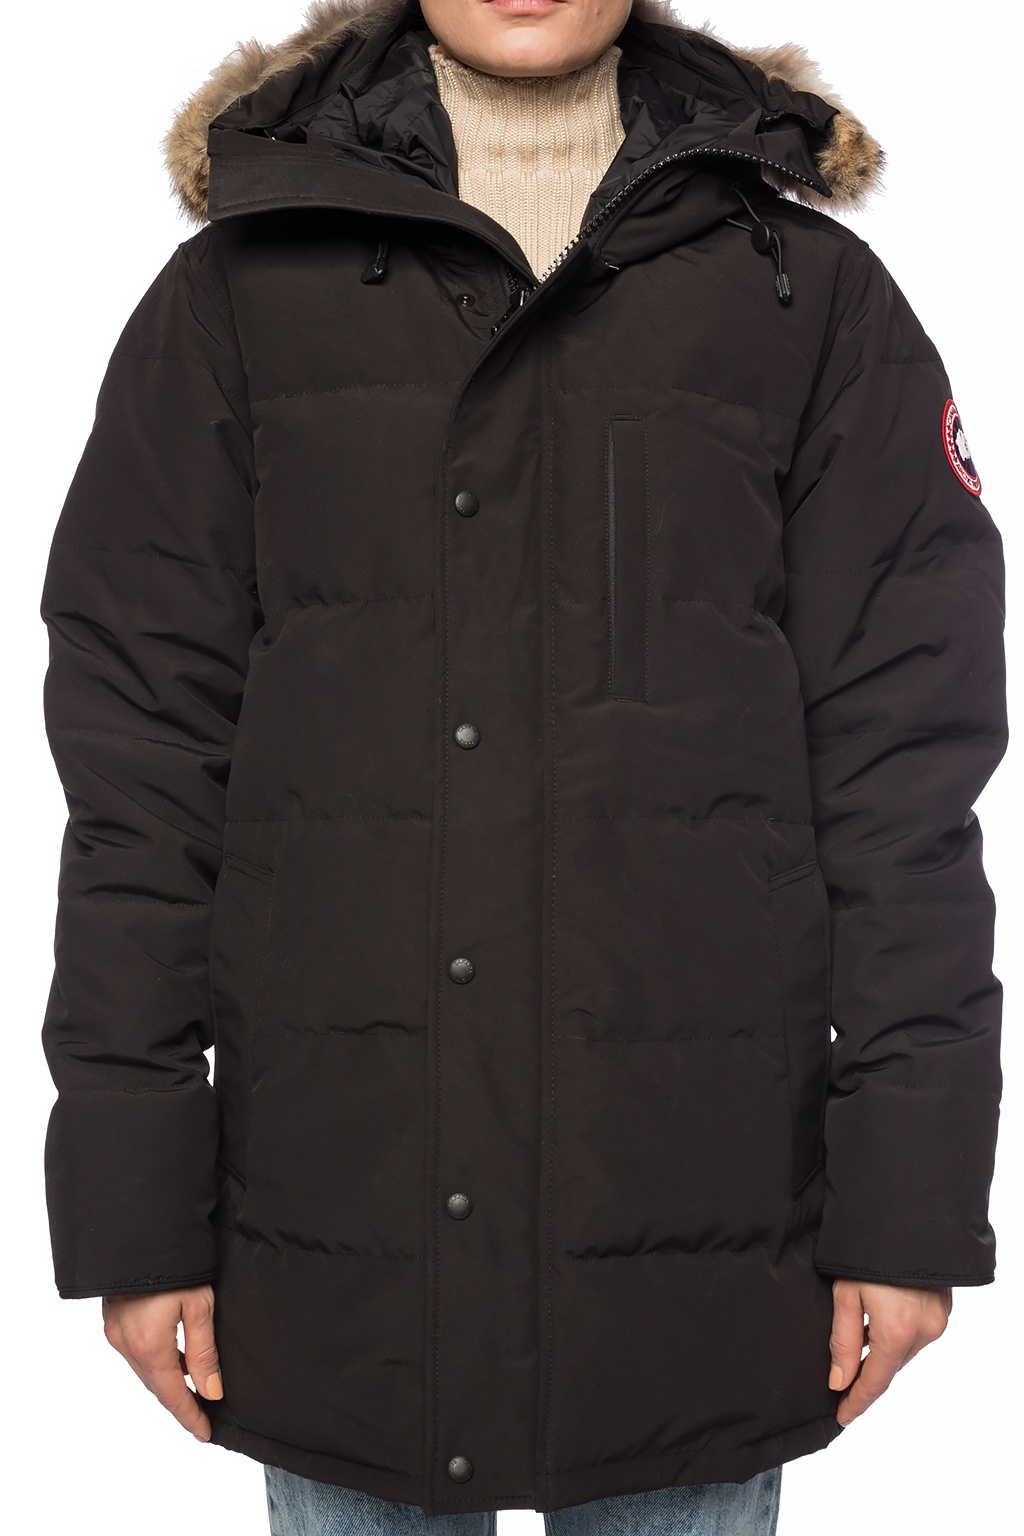 Black 'Carson' down jacket Canada Goose - Vitkac Canada